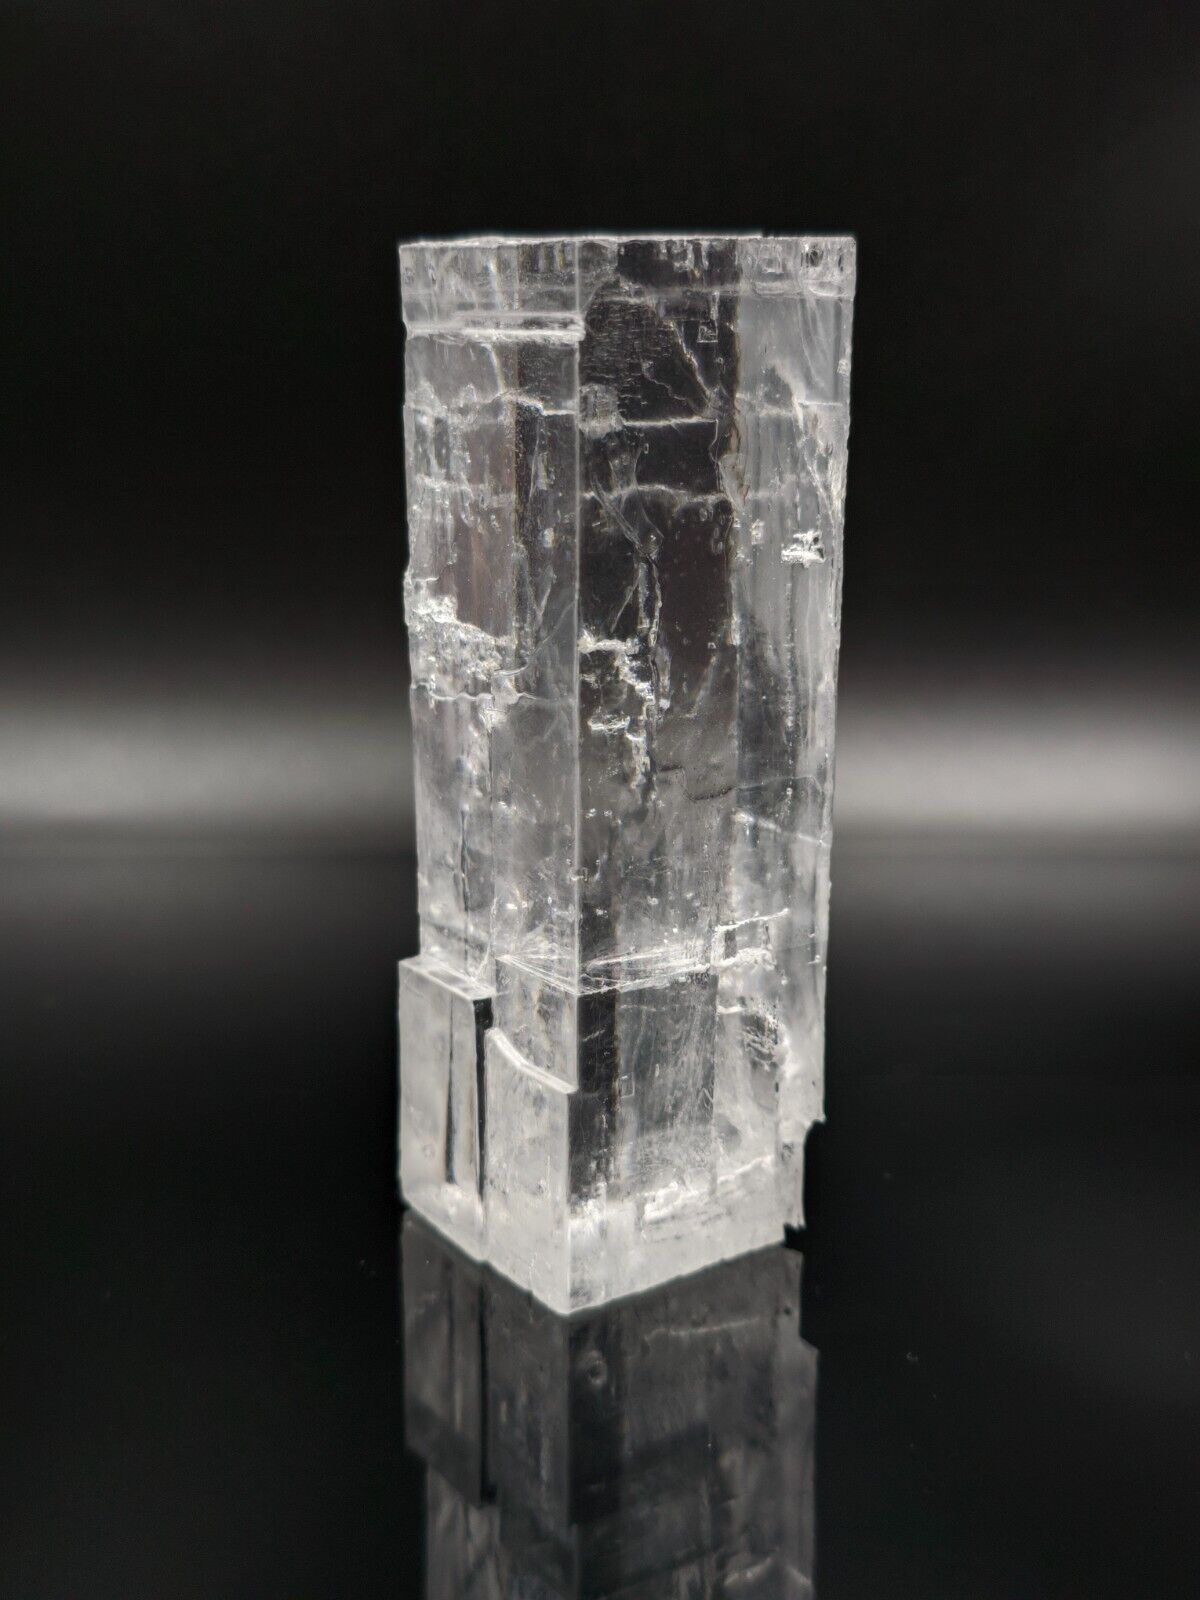 Halite crystal with water inside, enhydro halite 193g. - Bakhmut field, Ukraine